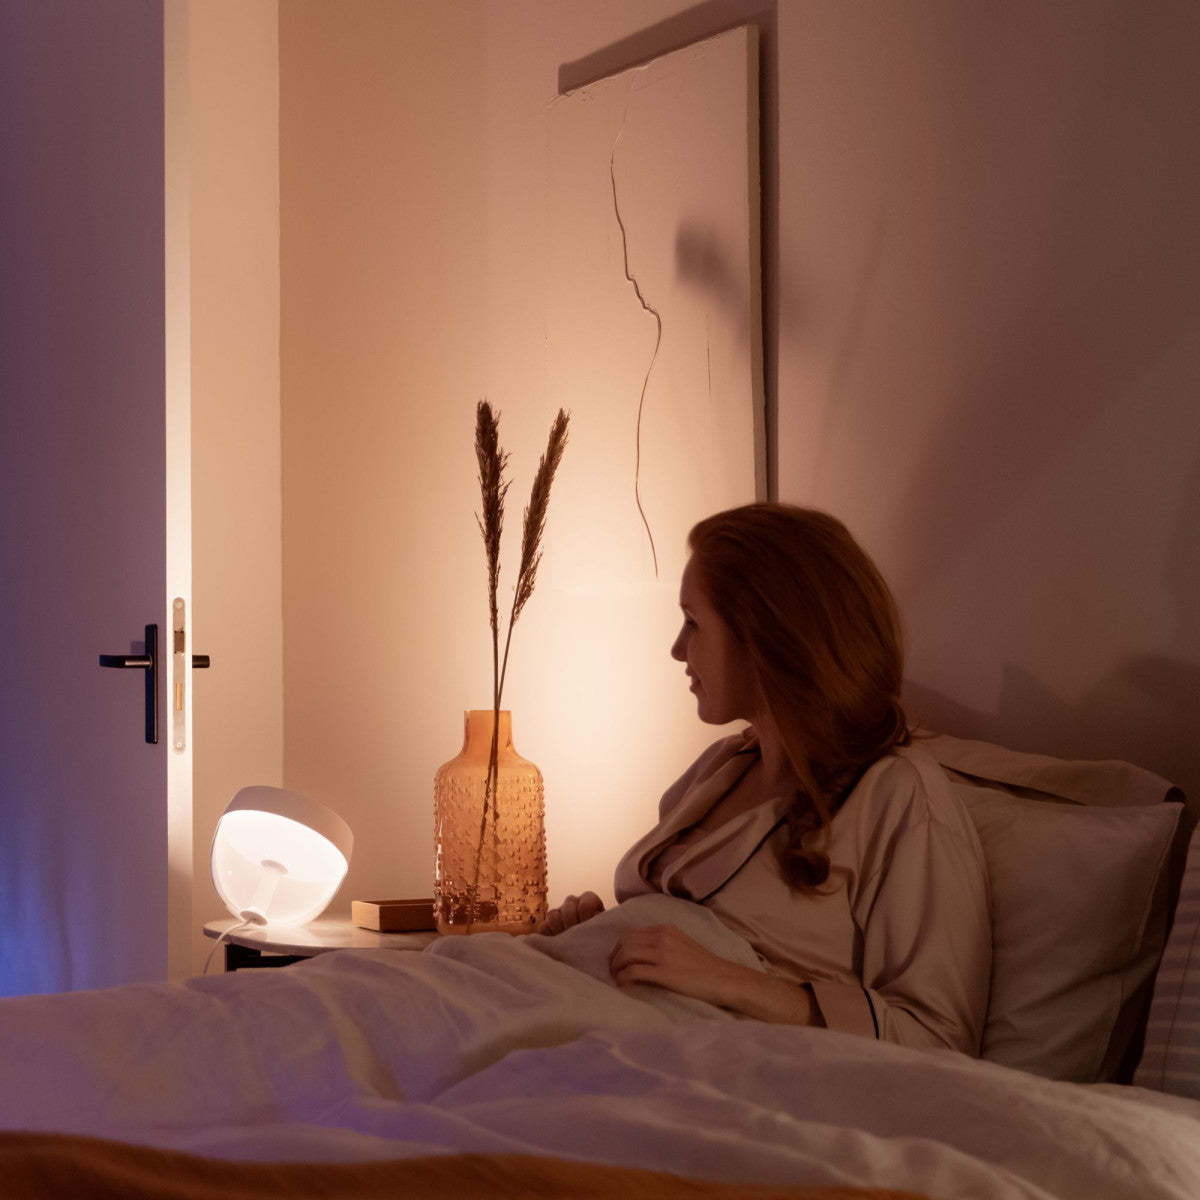 Philips Hue Iris table lamp Black Smart Lighting with Bluetooth, Works with Alexa, Google Assistant and Apple Homekit